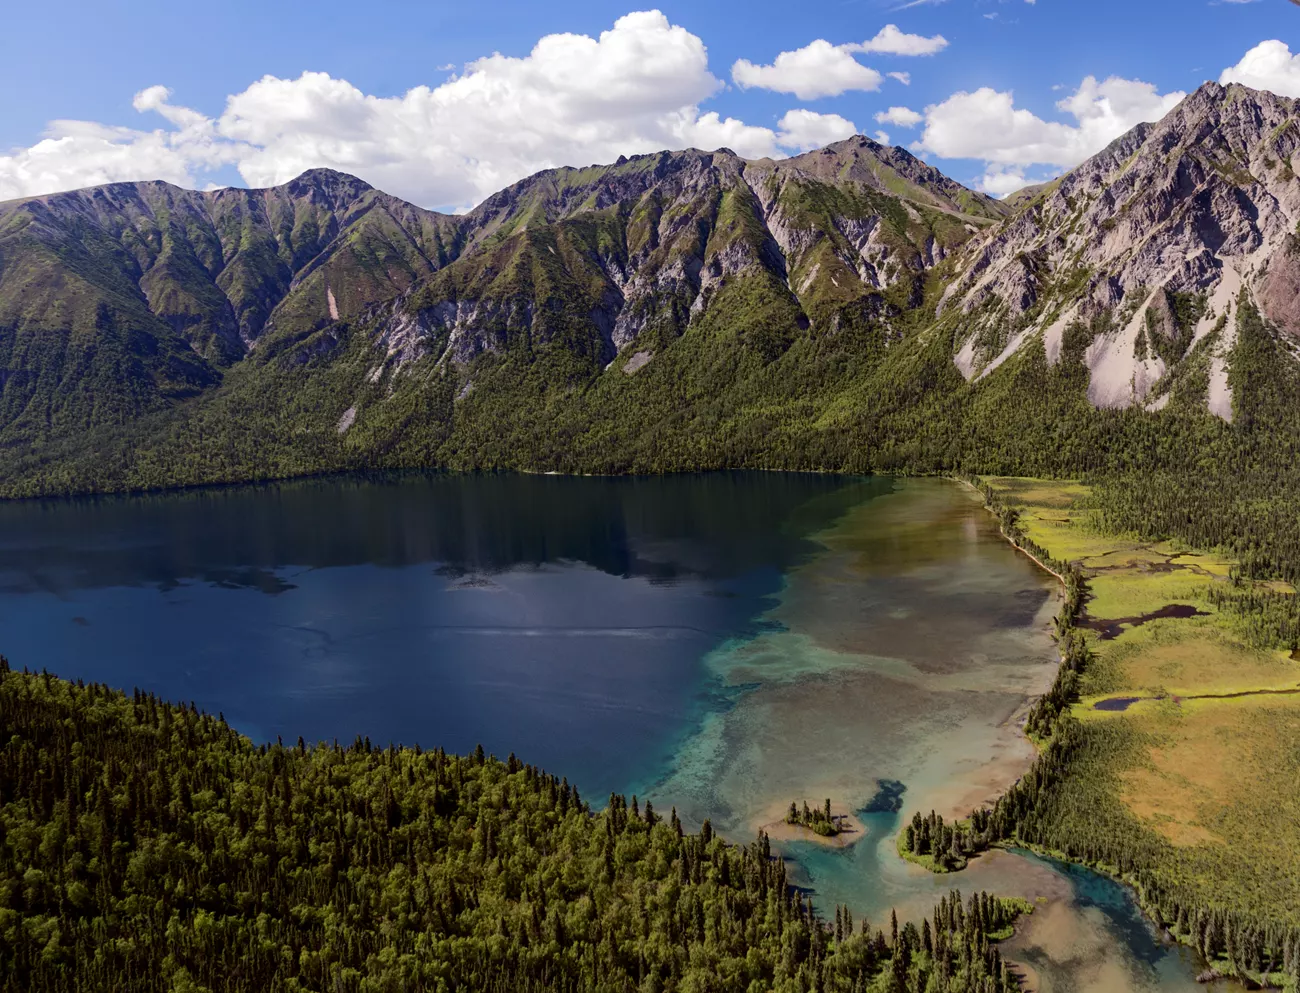 verdant mountains surround a deep blue lake.